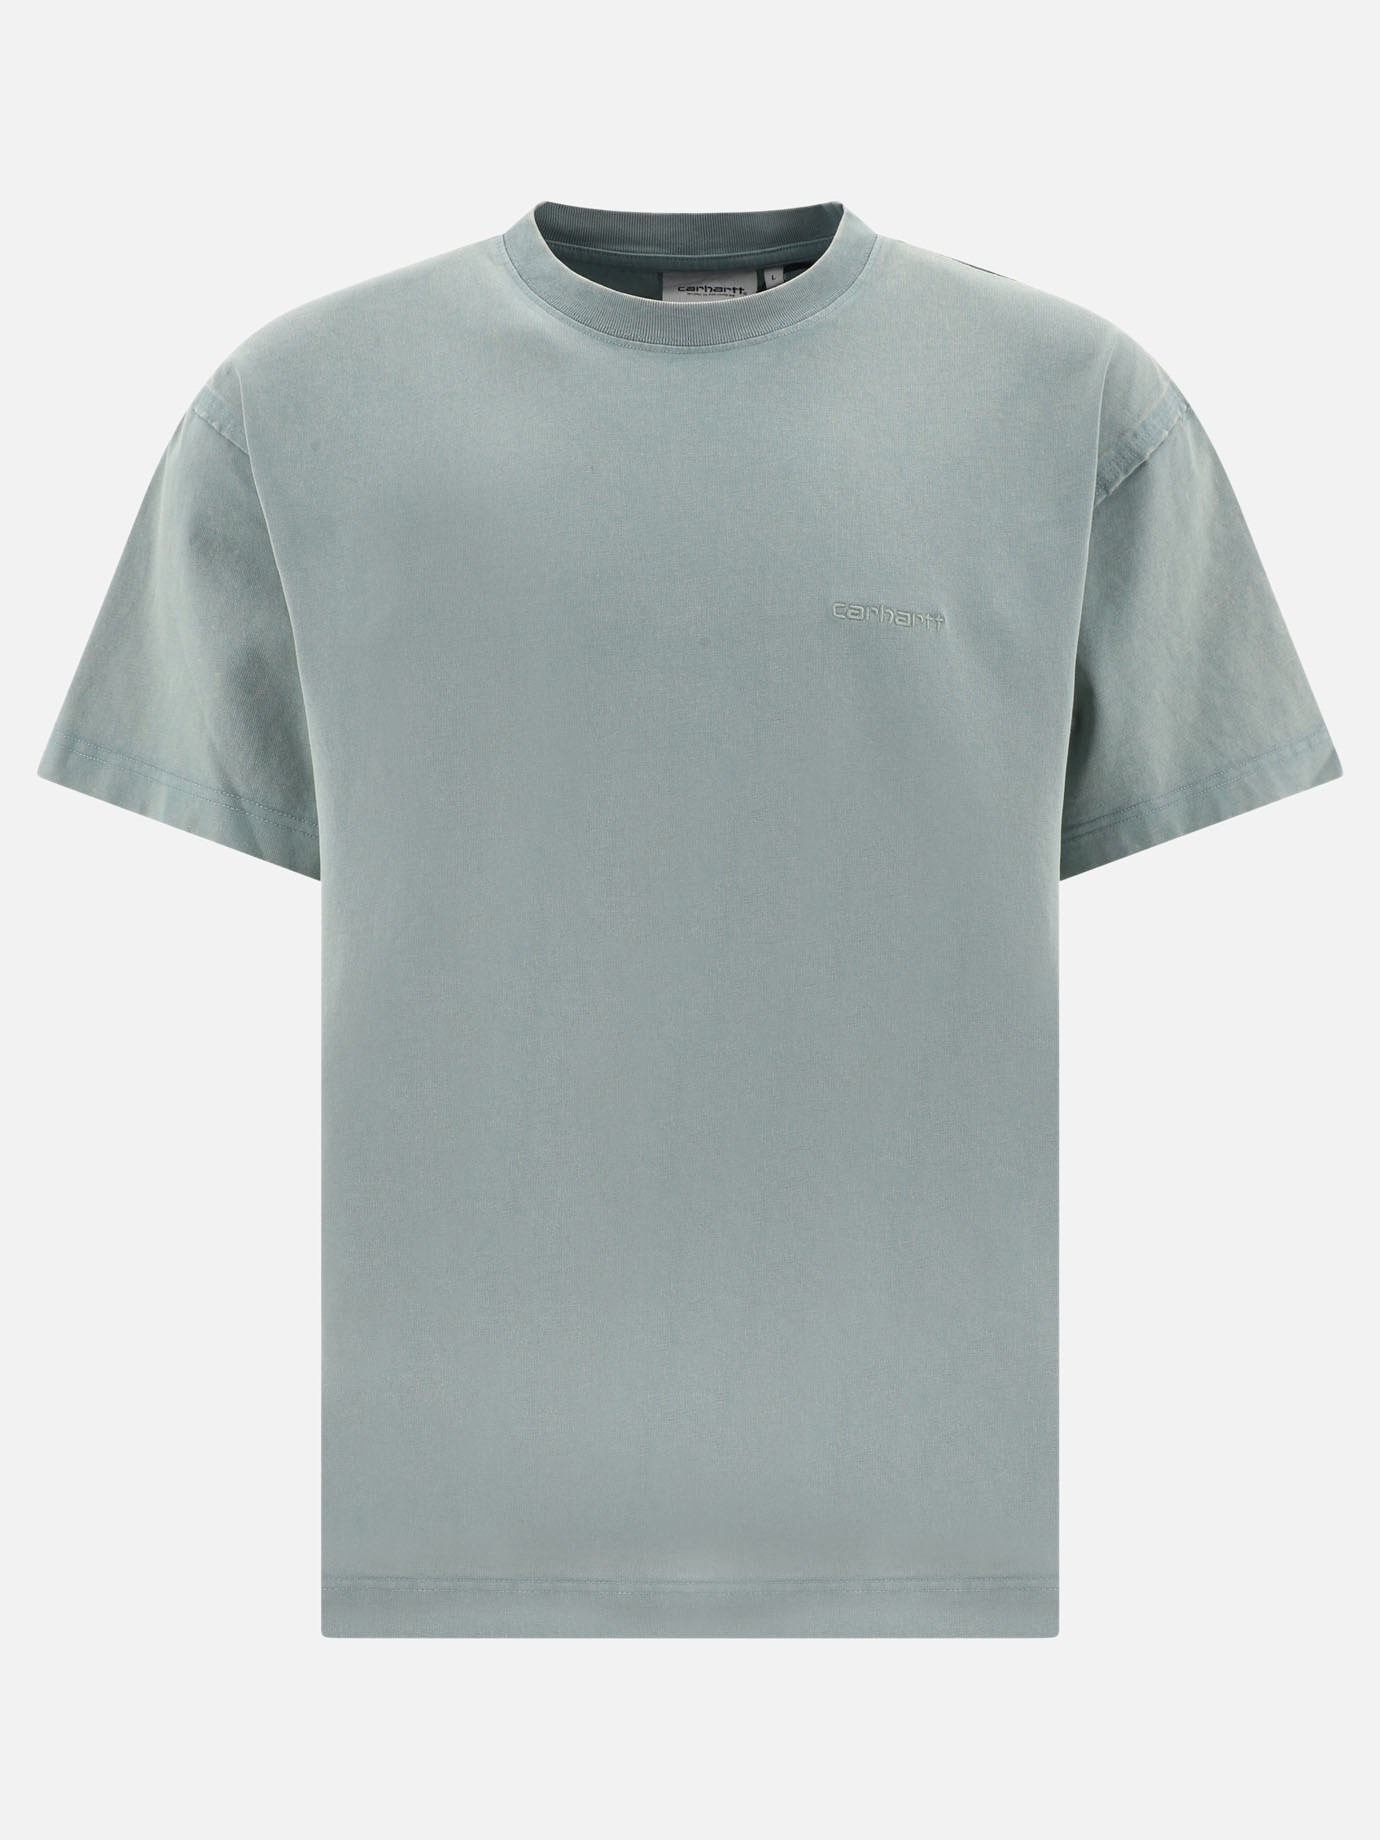  Marfa  t-shirtby Carhartt WIP - 4